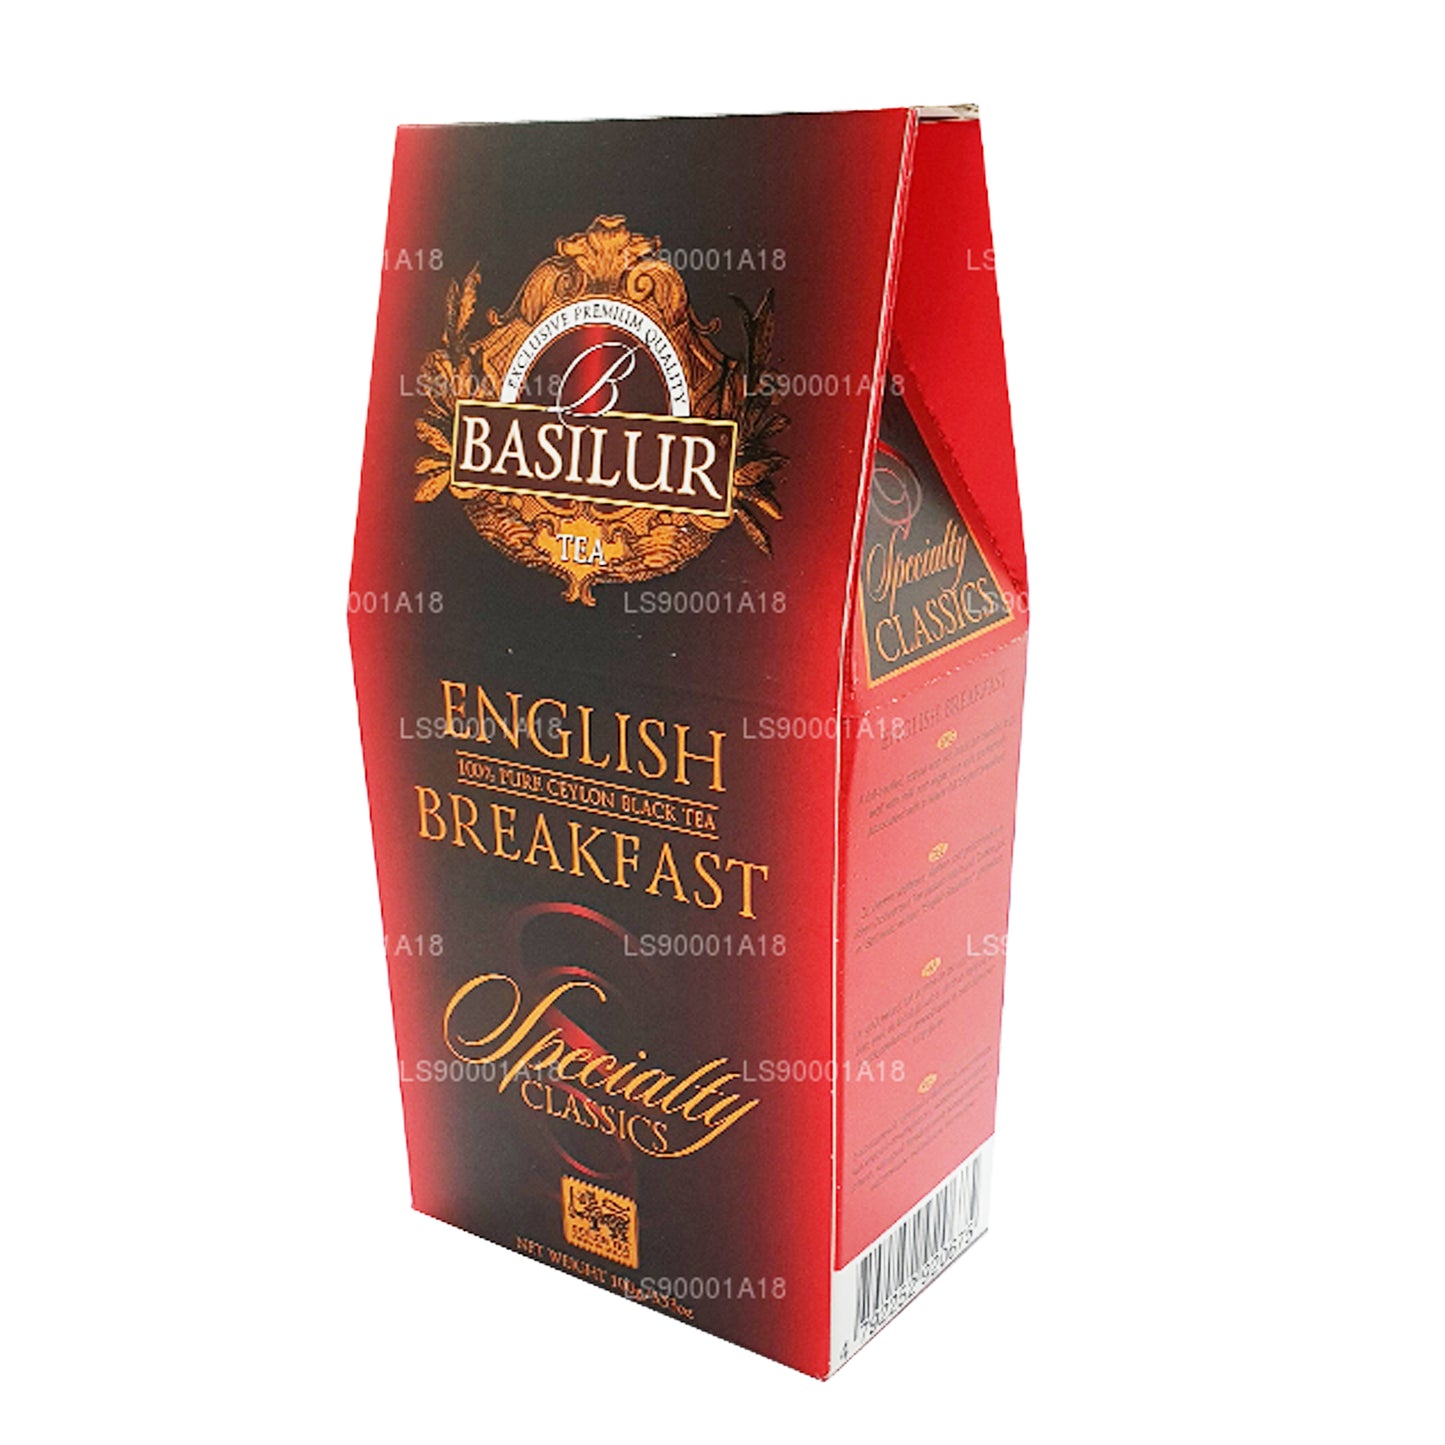 Basilur Specialty Classics İngiliz Kahvaltısı (100g)